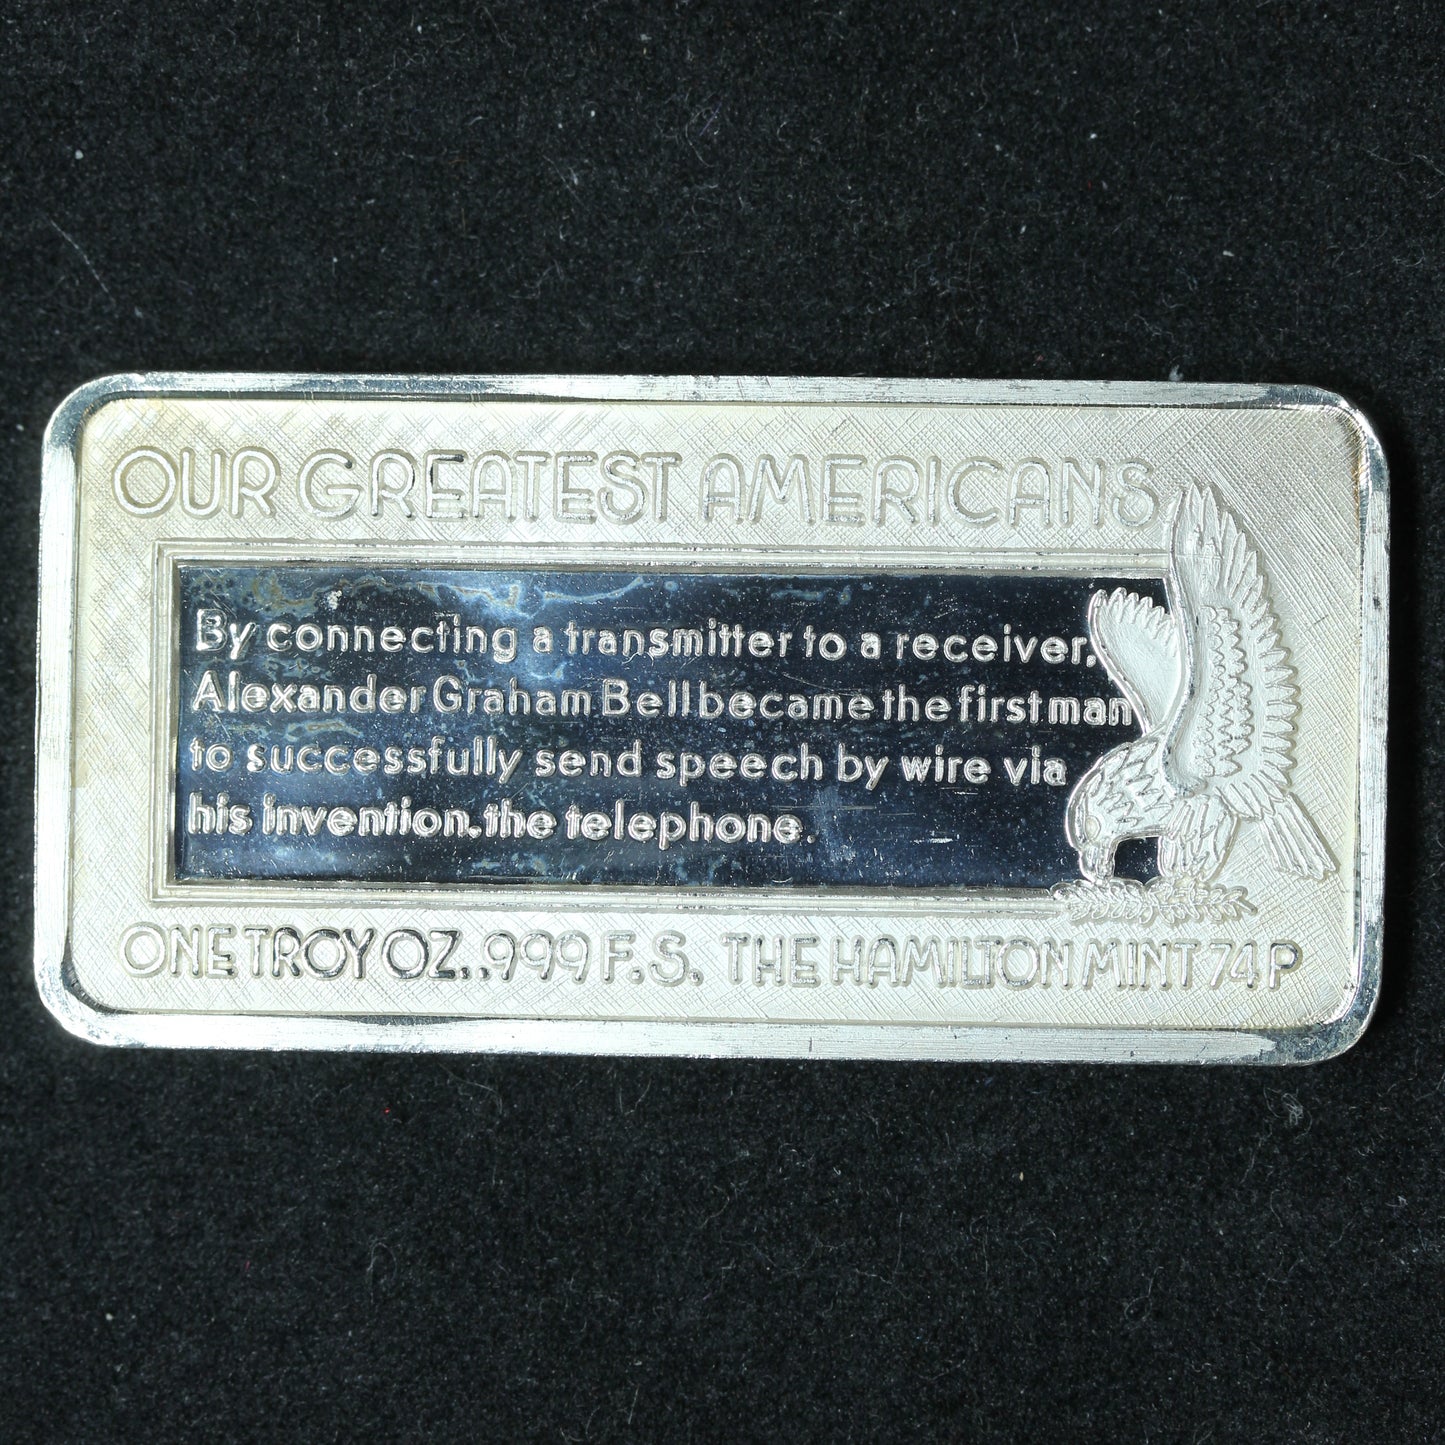 1 oz .999 Fine Silver Bar - Hamilton Mint Greatest Americans - Alexander Graham Bell